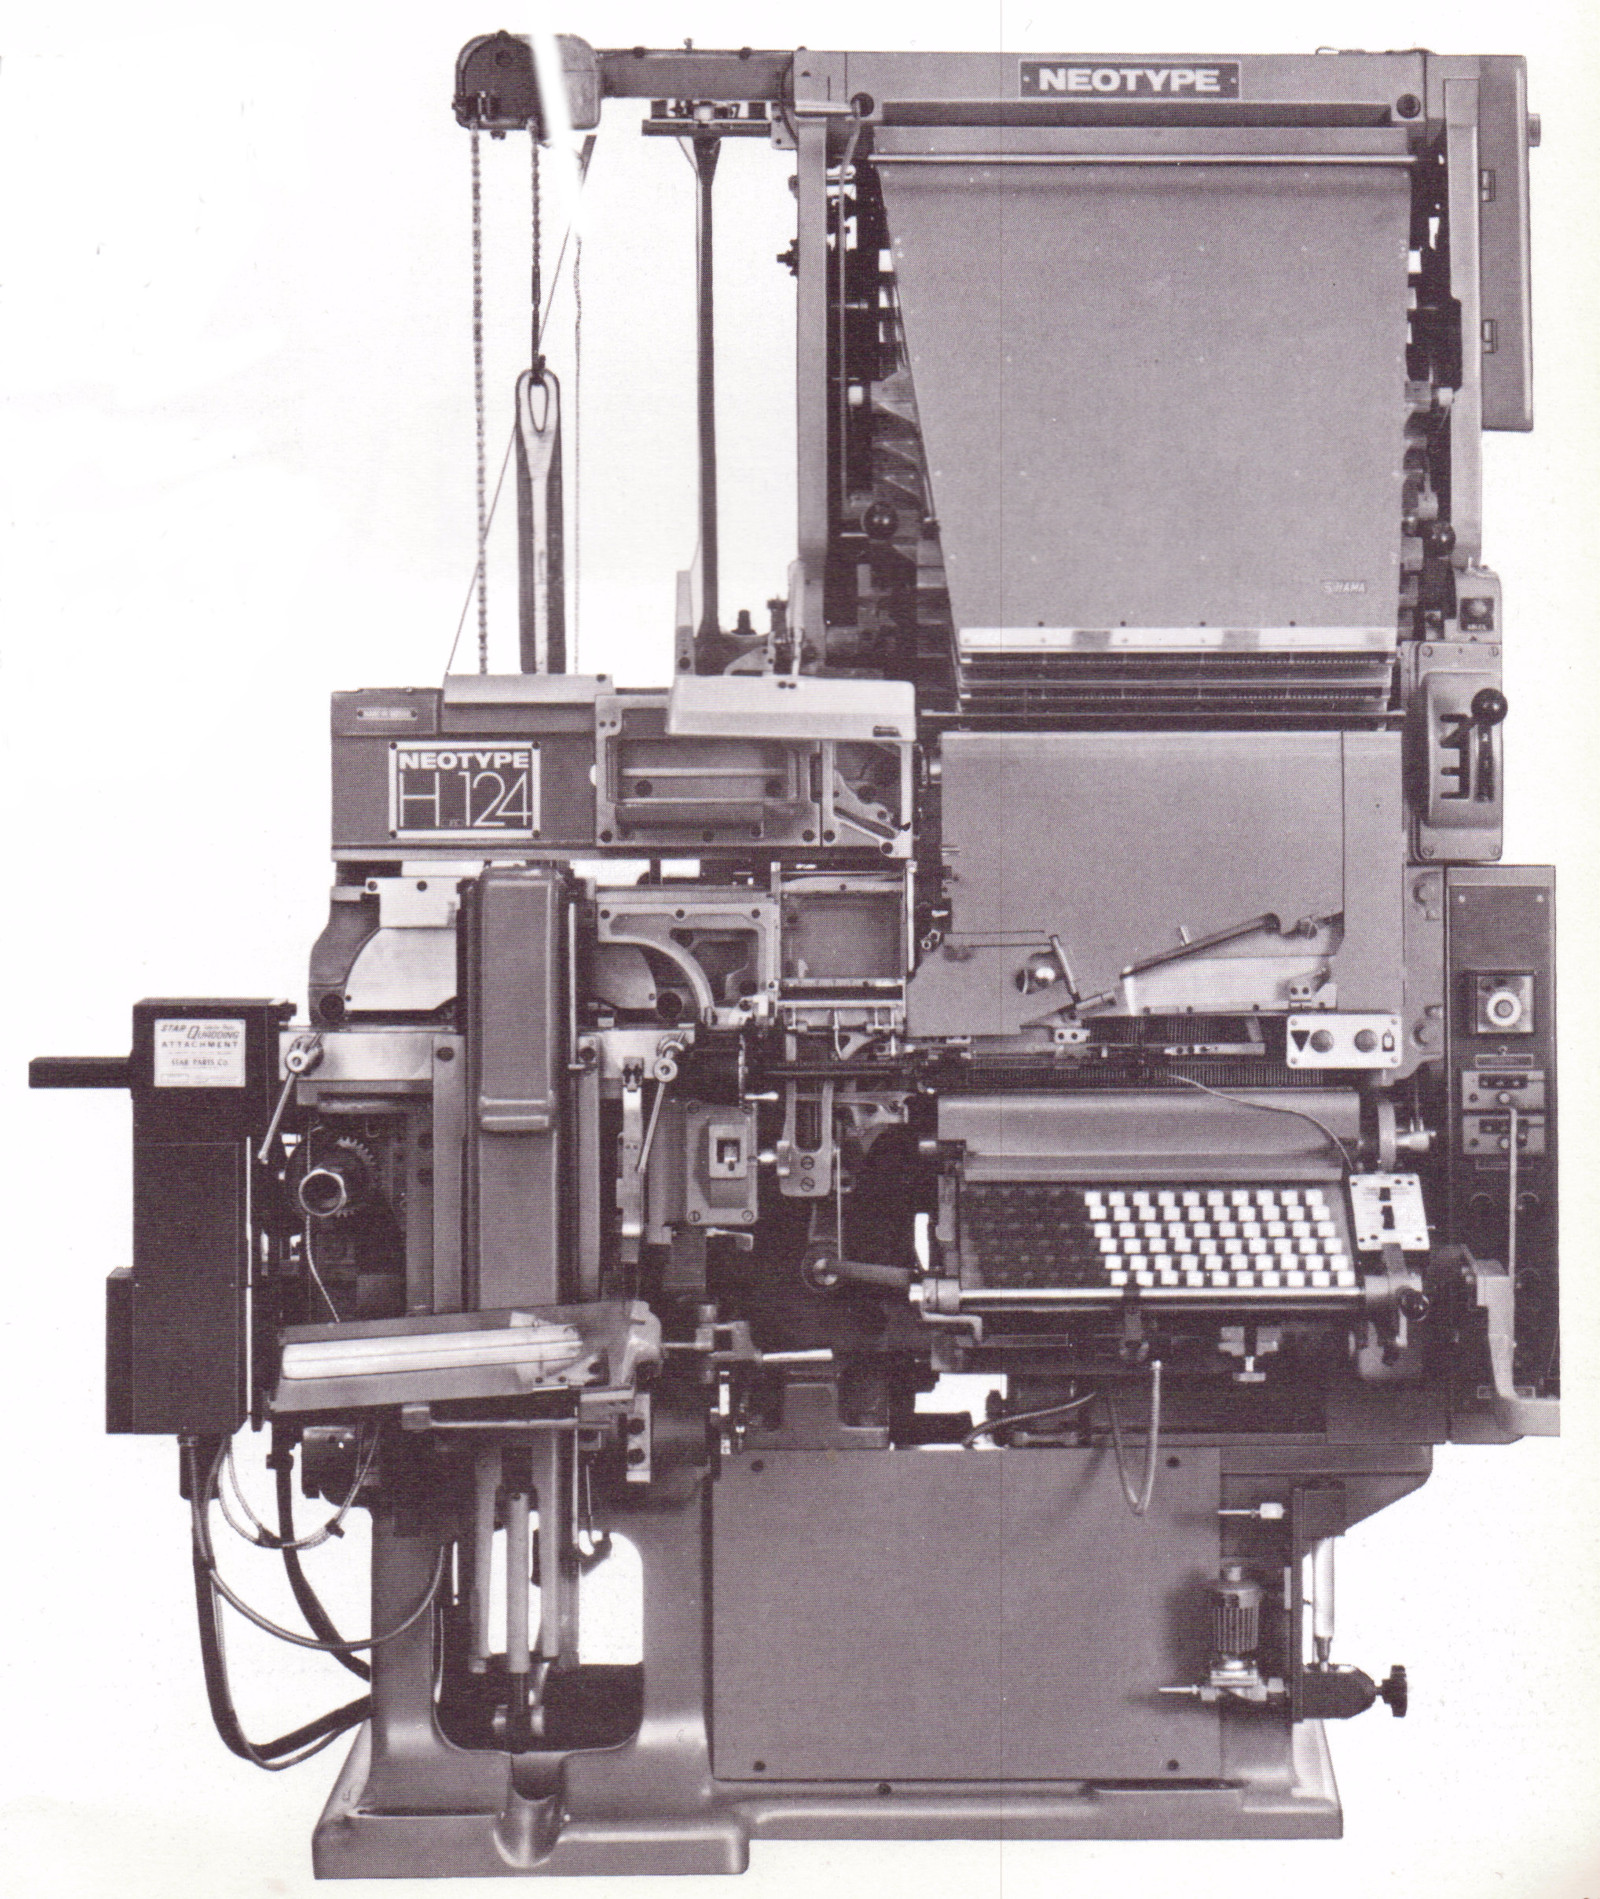 Neotype H124 Russian linecasting typesetting machine